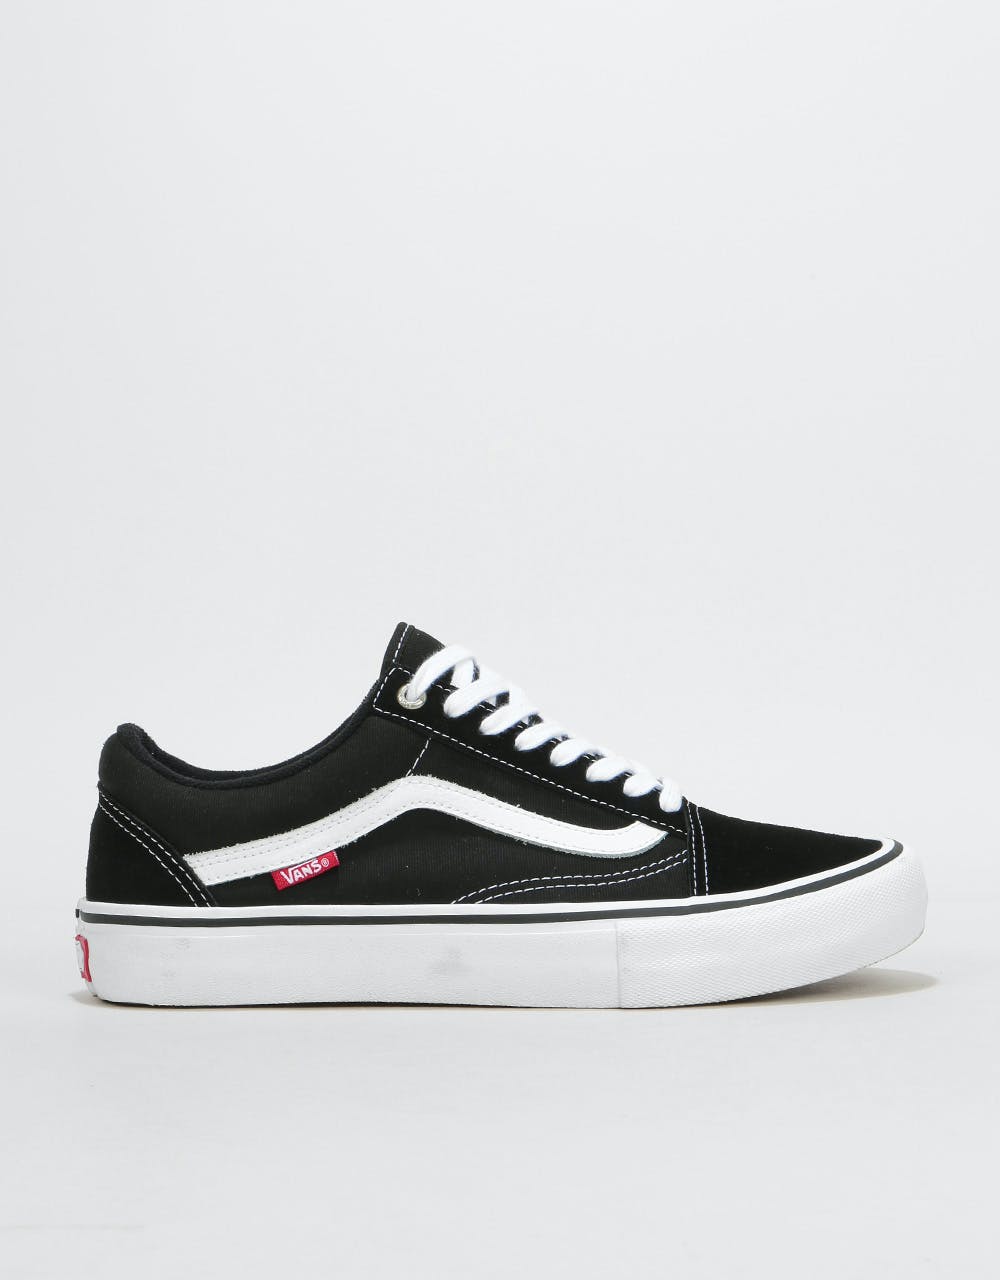 Vans Old Skool Pro Skate Shoes - Black/White – Route One